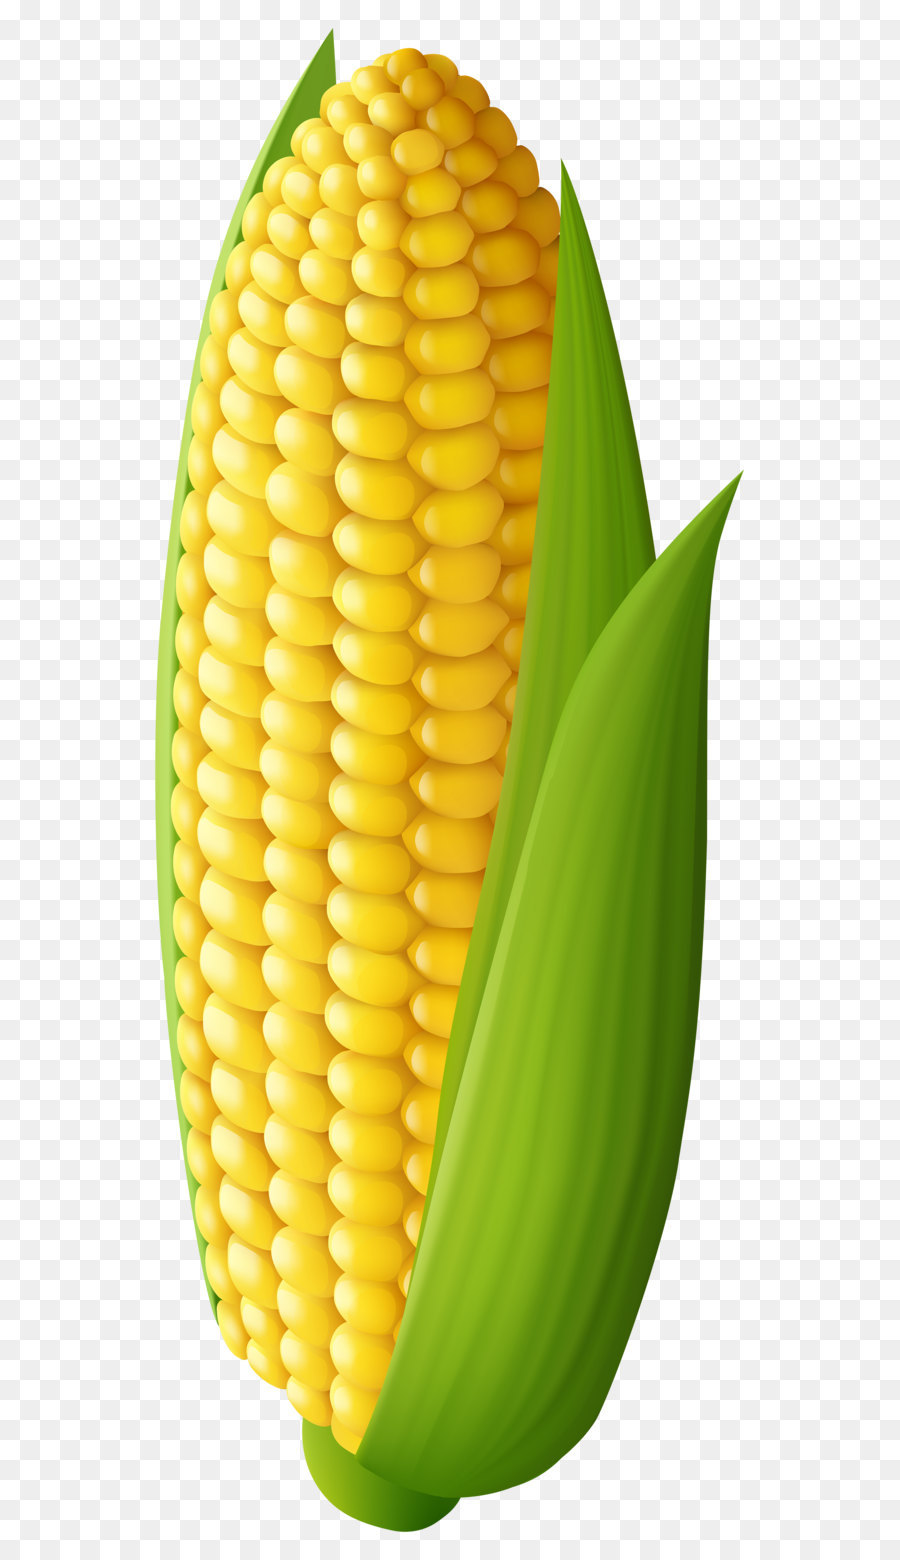 Corn on the cob Maize Clip art - Corn Transparent PNG Clip Art Image png download - 2509*6000 - Free Transparent Corn On The Cob png Download.